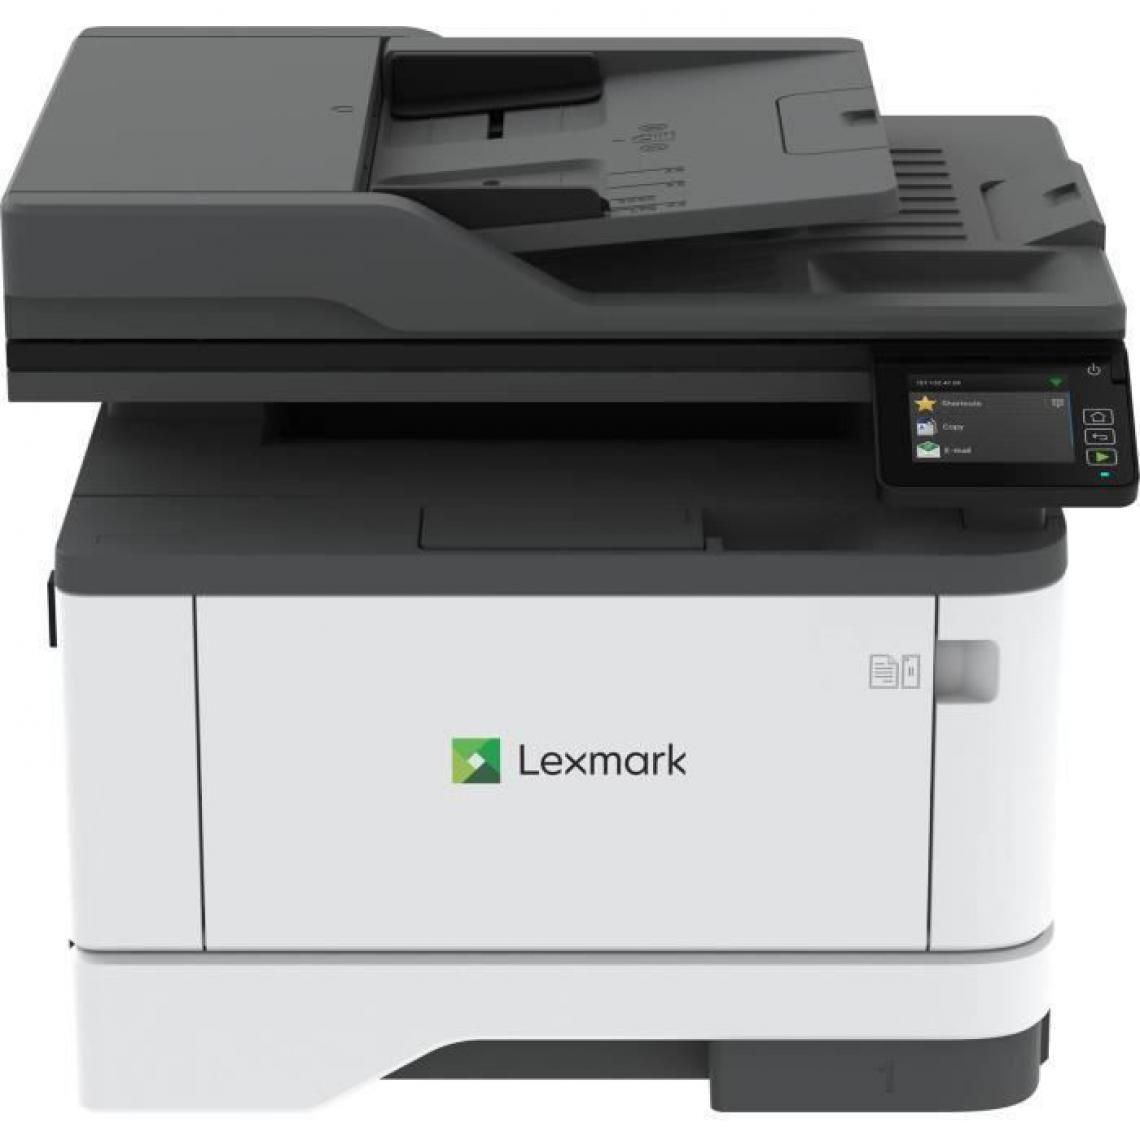 Lexmark - Imprimante monochrome - LEXMARK MB3442ADW - wifi + 3 ans de garantie offert - Imprimante Jet d'encre